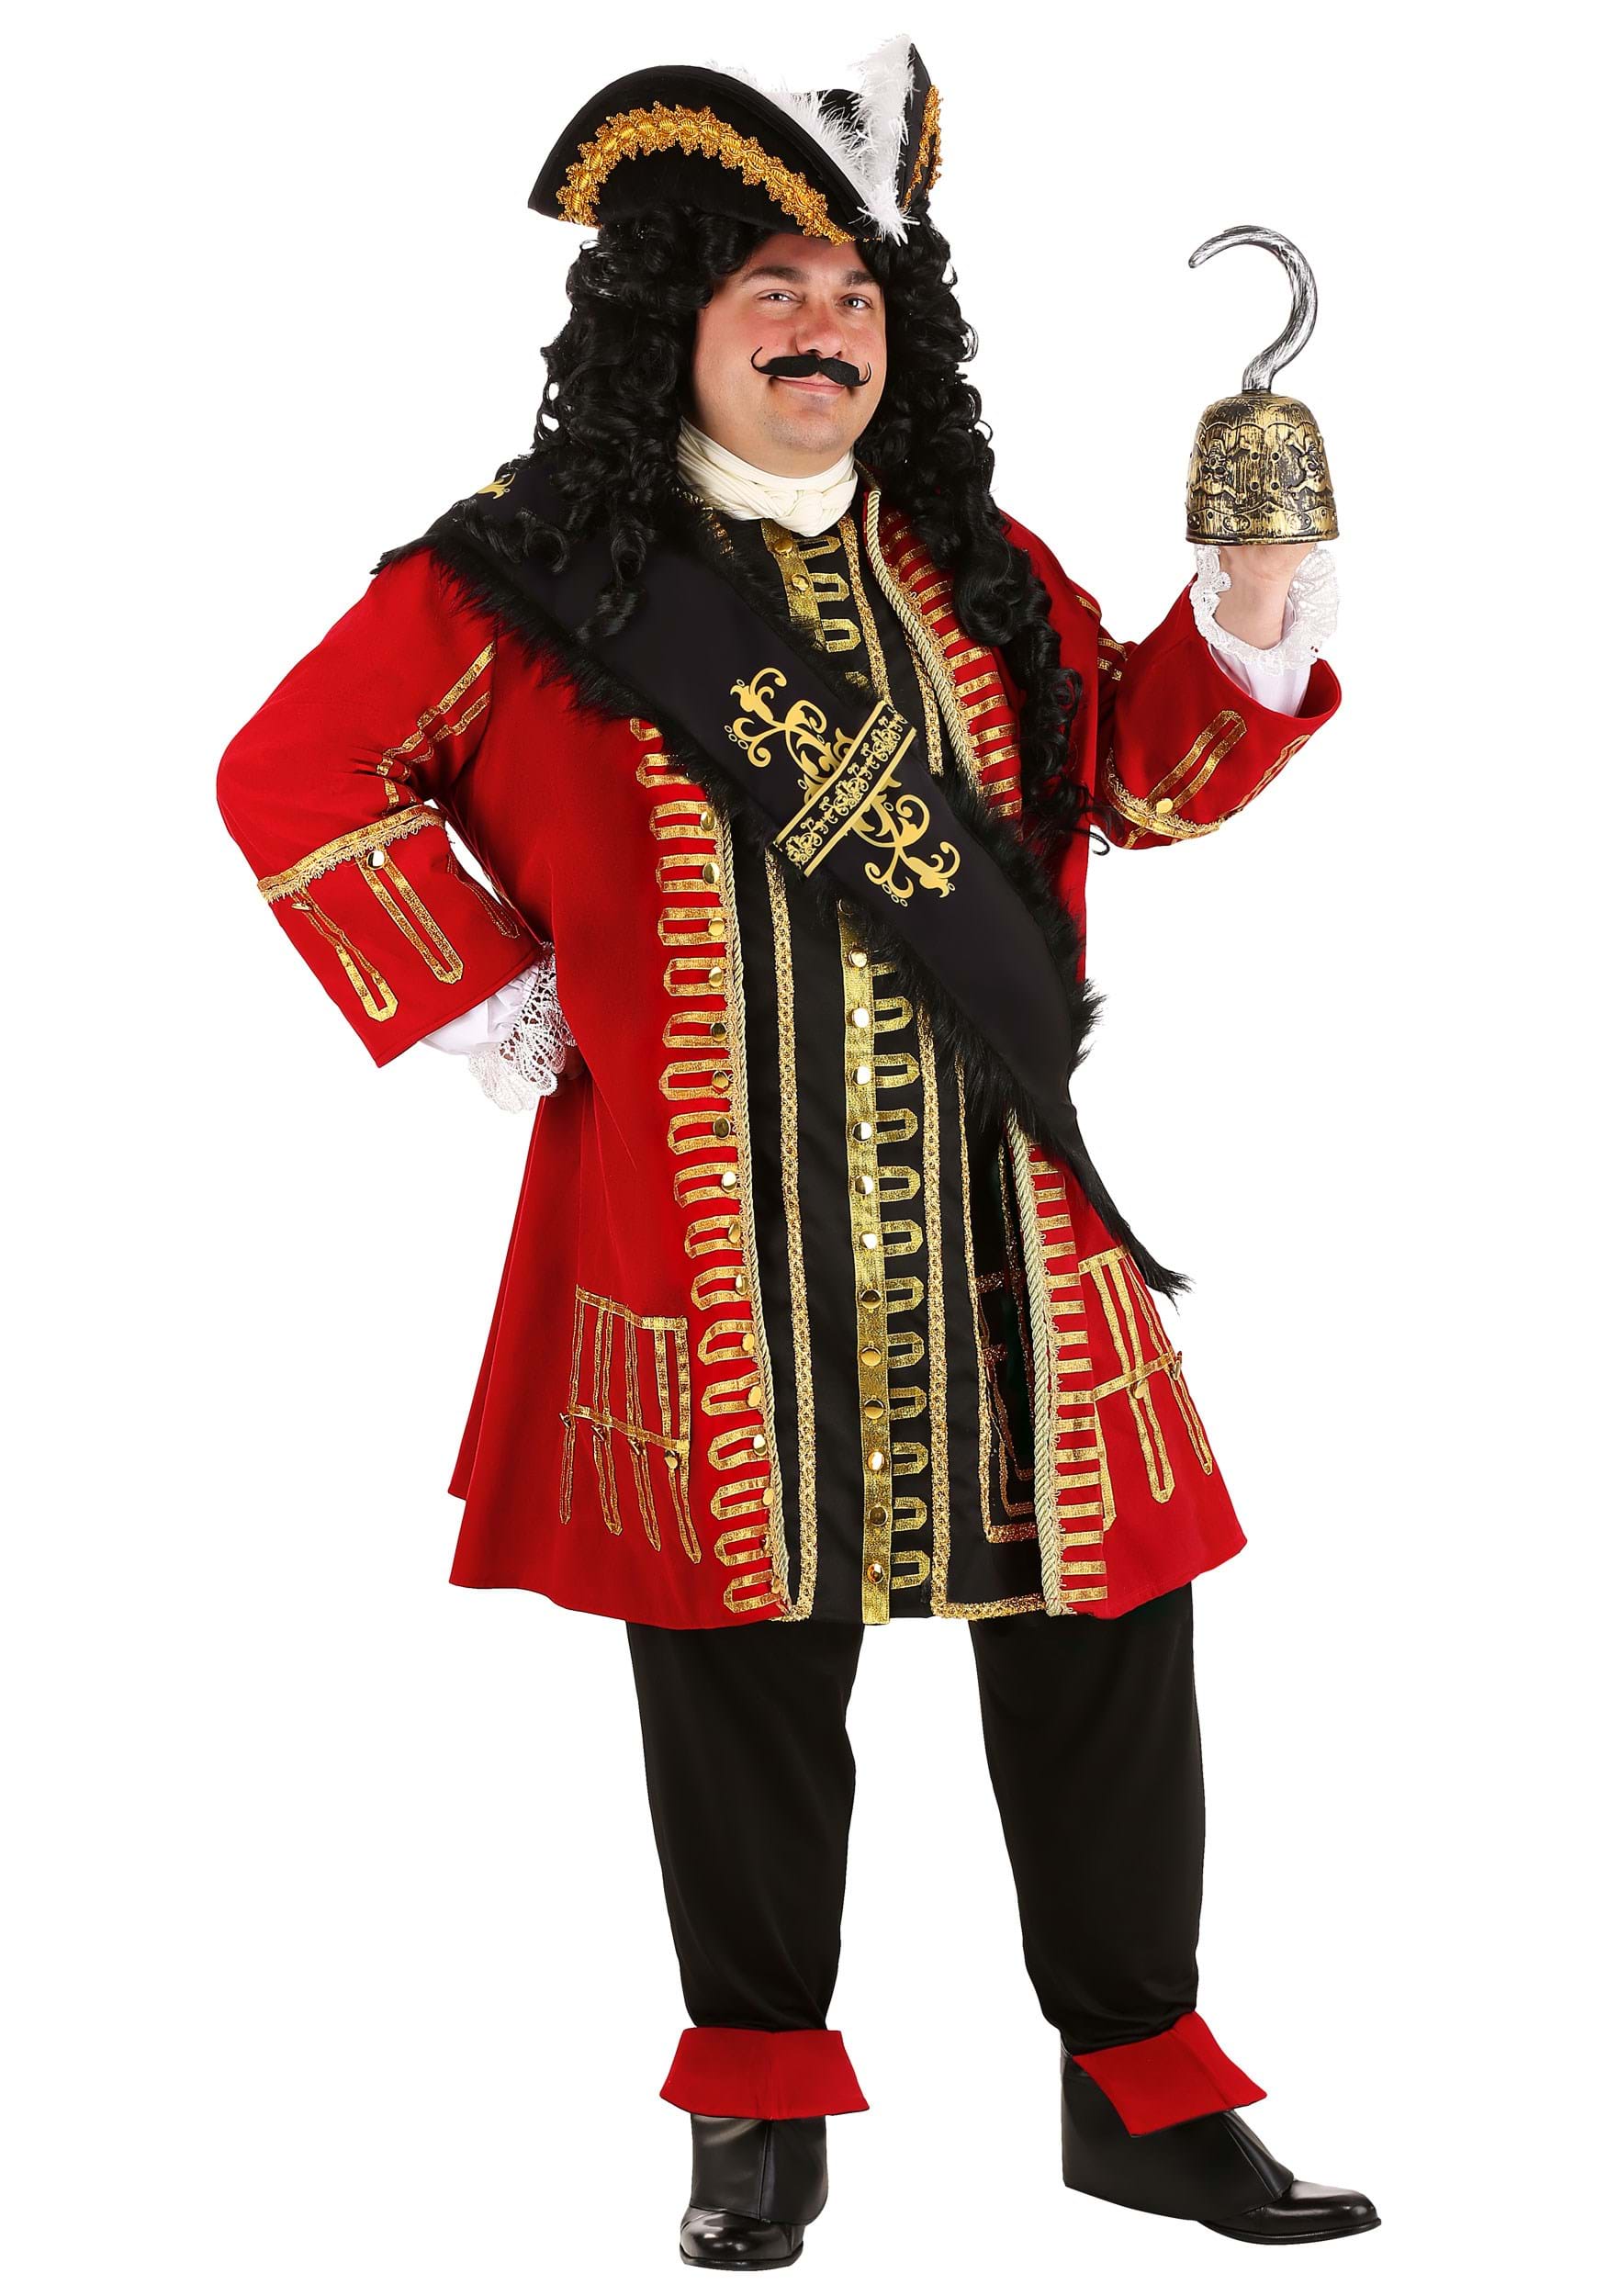 https://images.fun.co.uk/products/64661/1-1/mens-plus-size-elite-captain-hook-costume.jpg